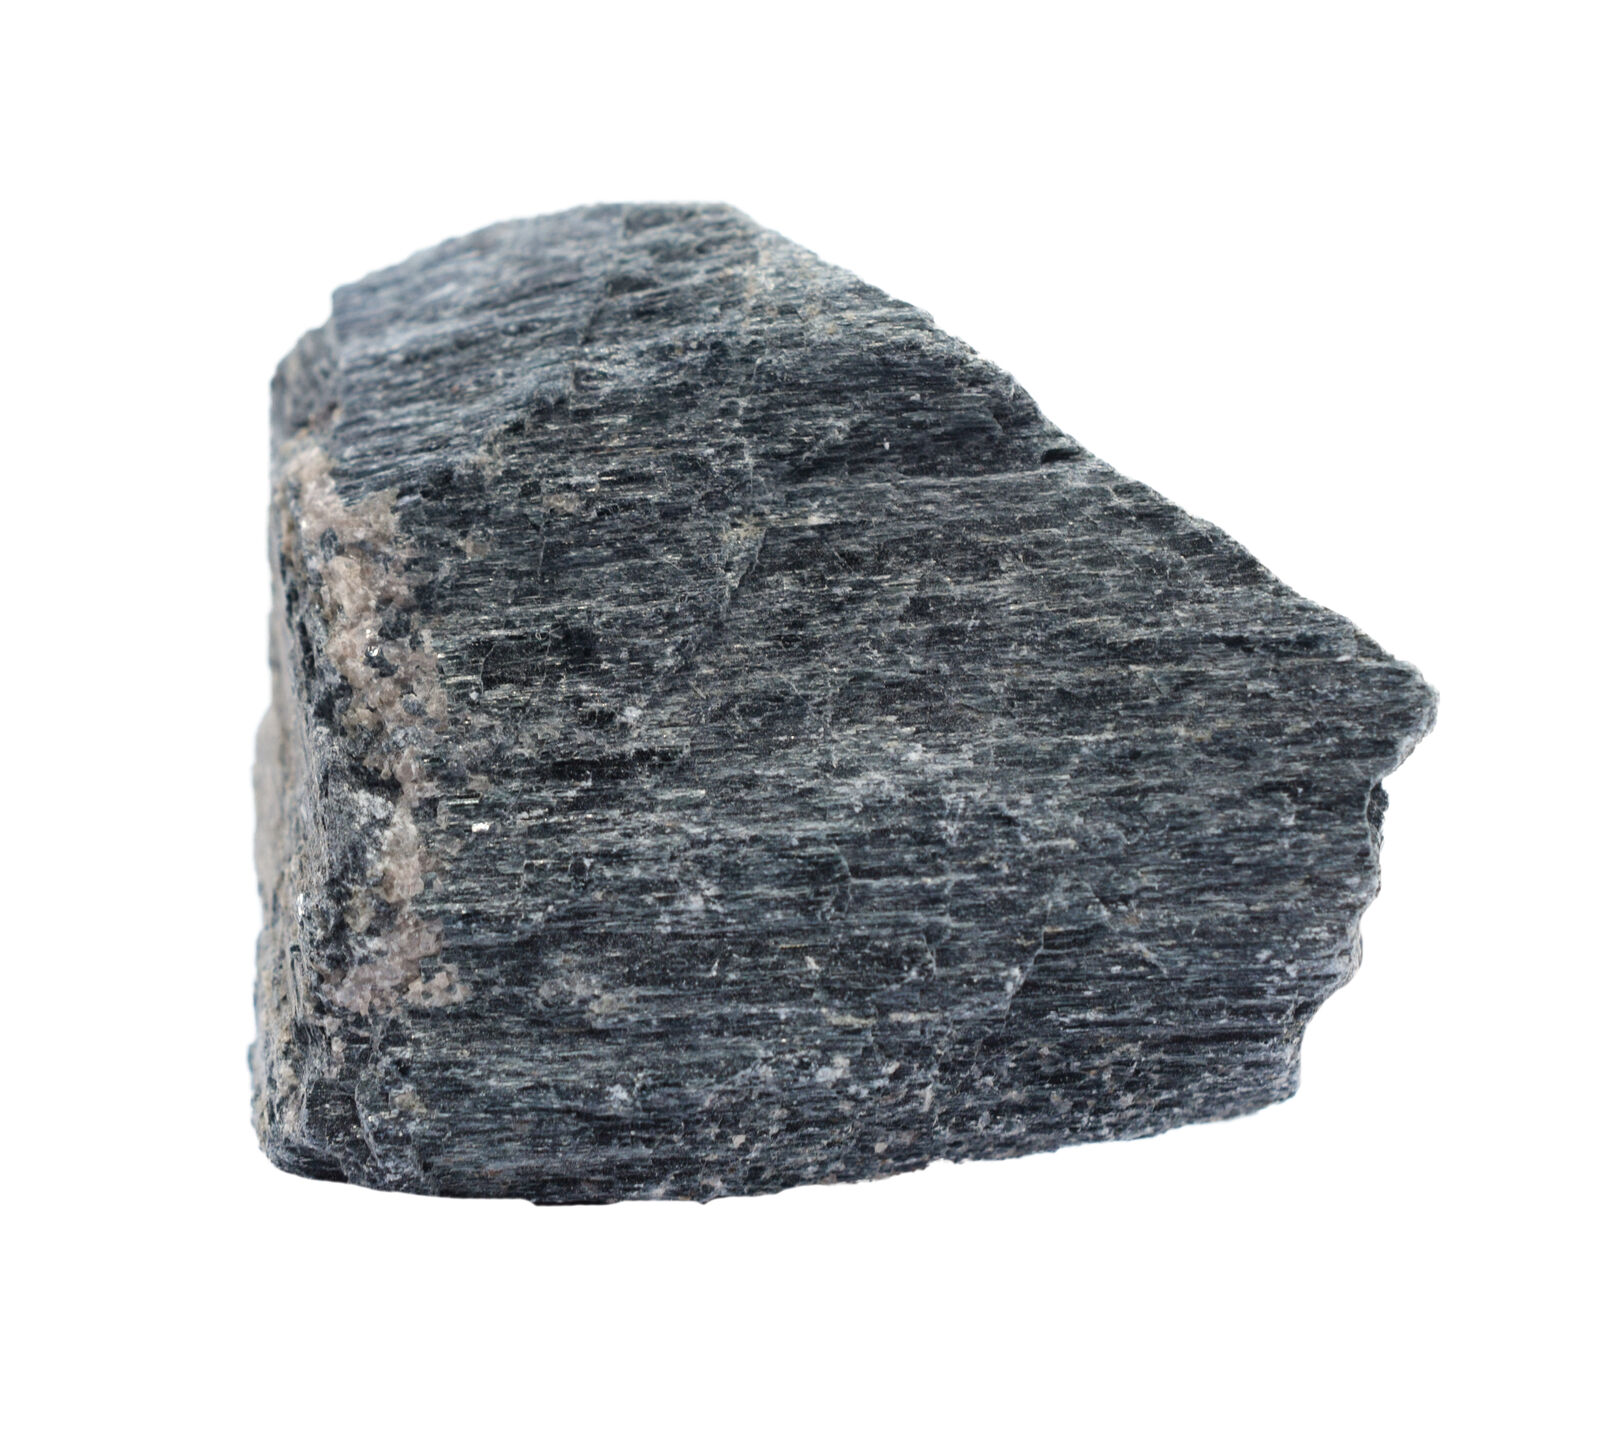 Raw Hornblende Amphibole Mineral Specimen, 1